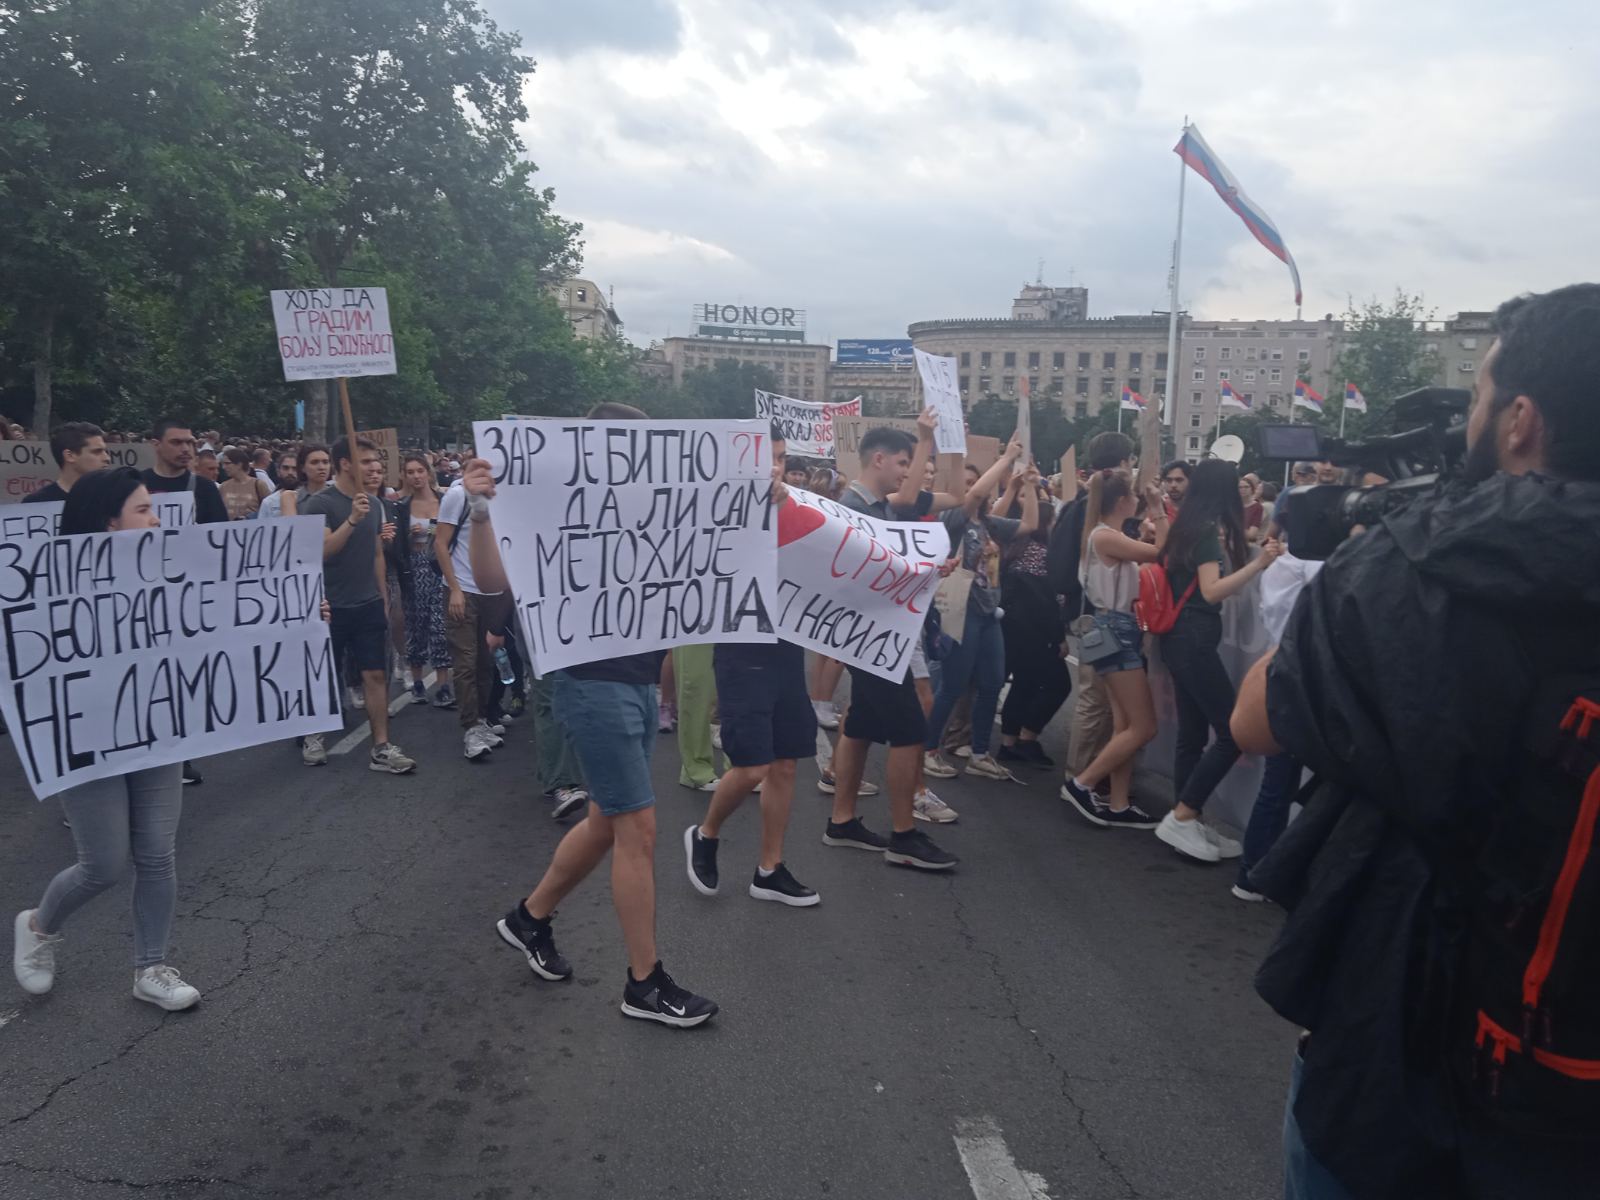 Protest "Srbija protiv nasilja" u preko 10 gradova obeležile šetnje, blokade puteva i zahtevi za ostavkama (FOTO, VIDEO) 75